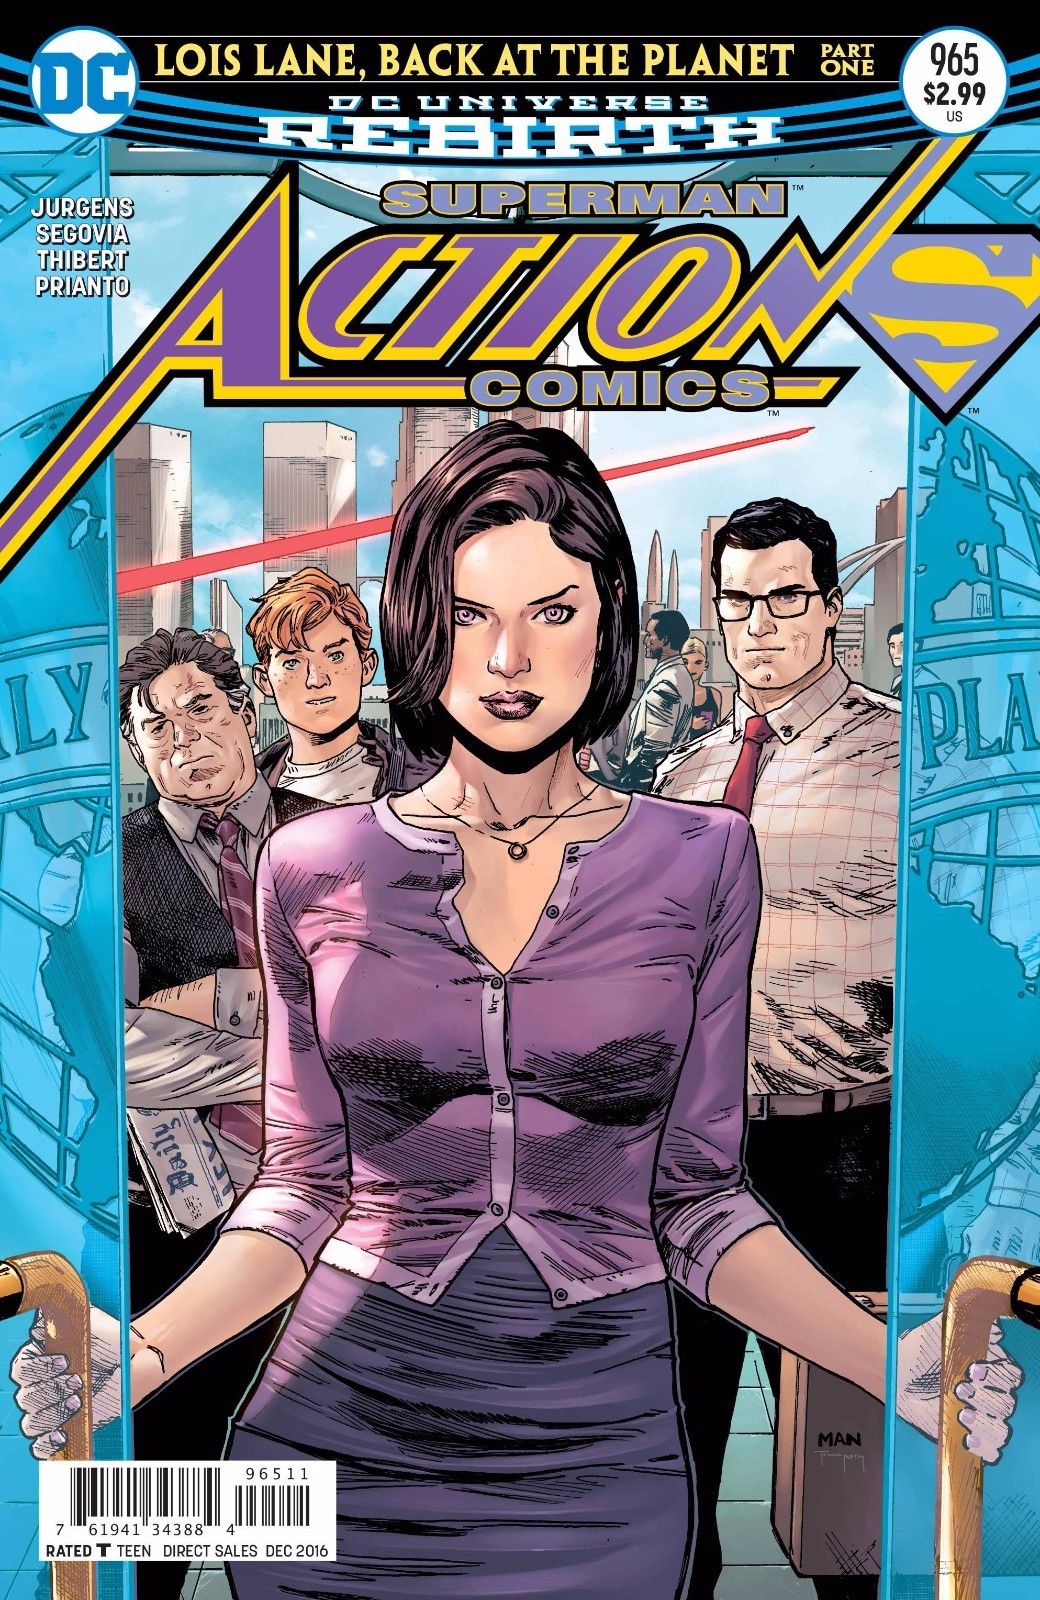 Action Comics #965